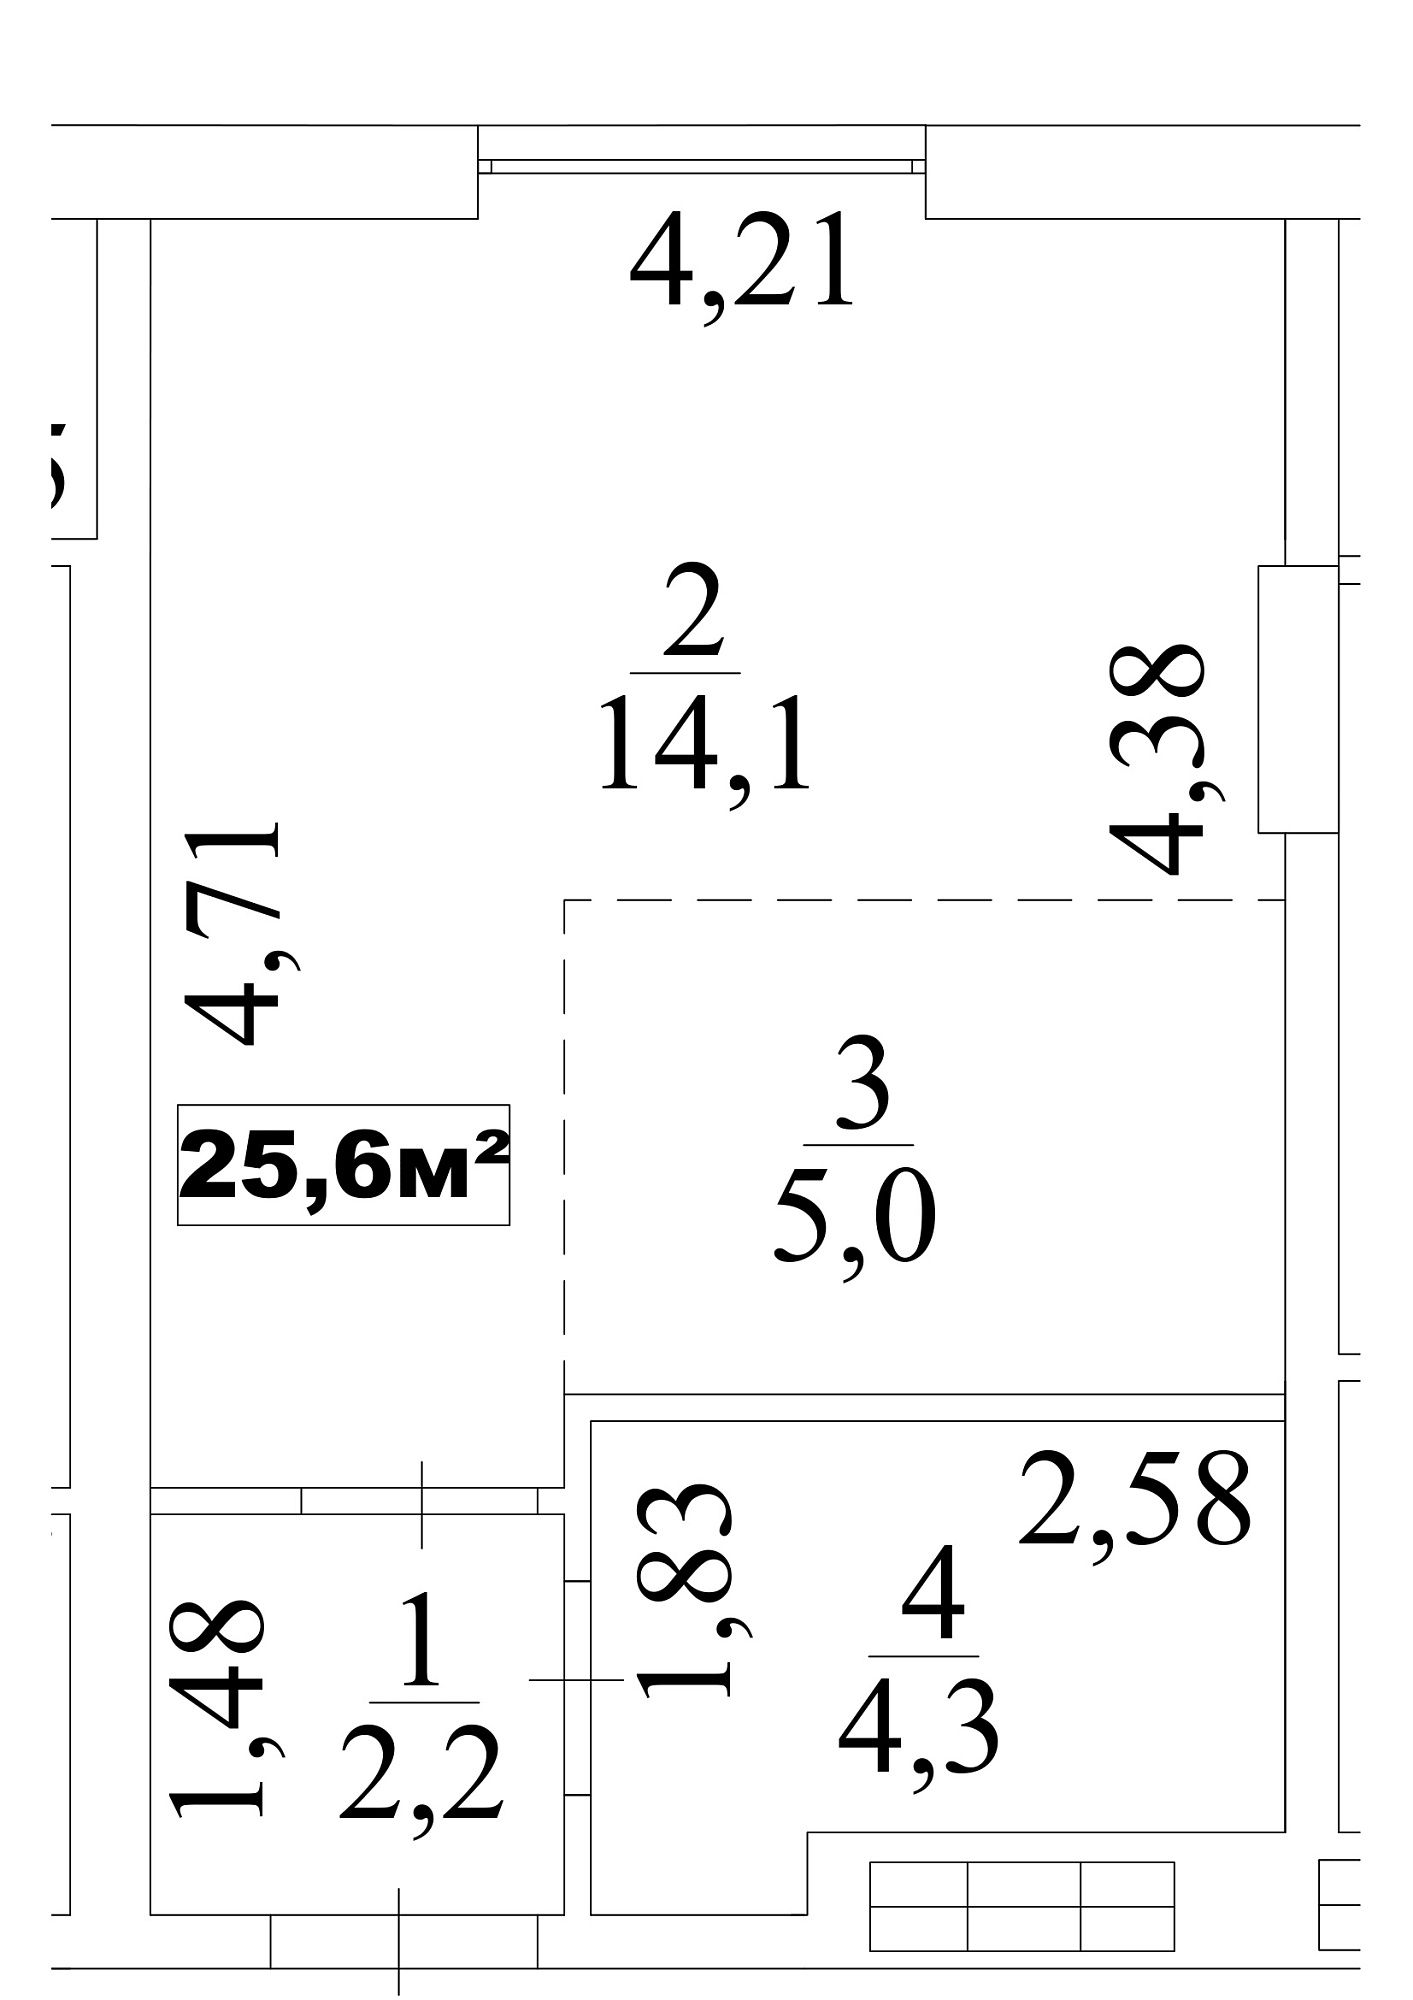 Планировка Smart-квартира площей 25.6м2, AB-10-04/0030в.